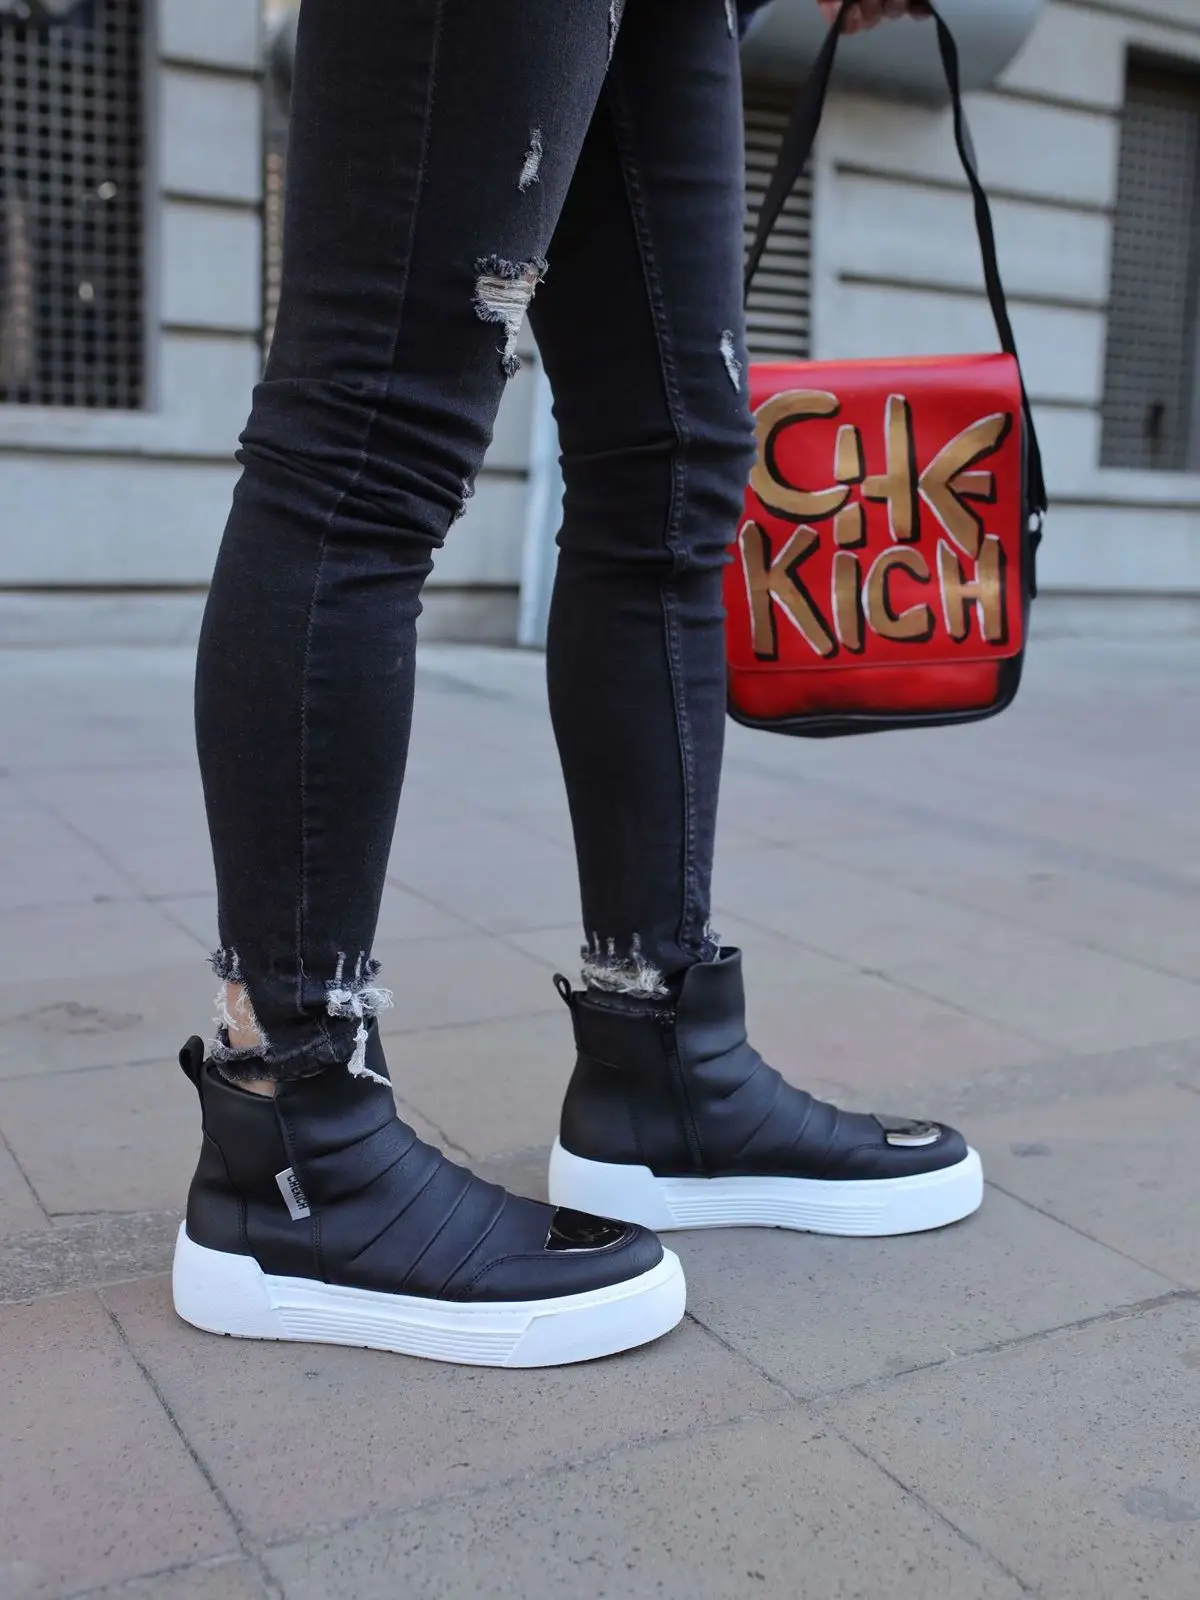 Chekich 2022 New Best Selling Leather Black Stylish New Season Men's Boots Waterproof Protective Wearproof Durable Hiking CH113